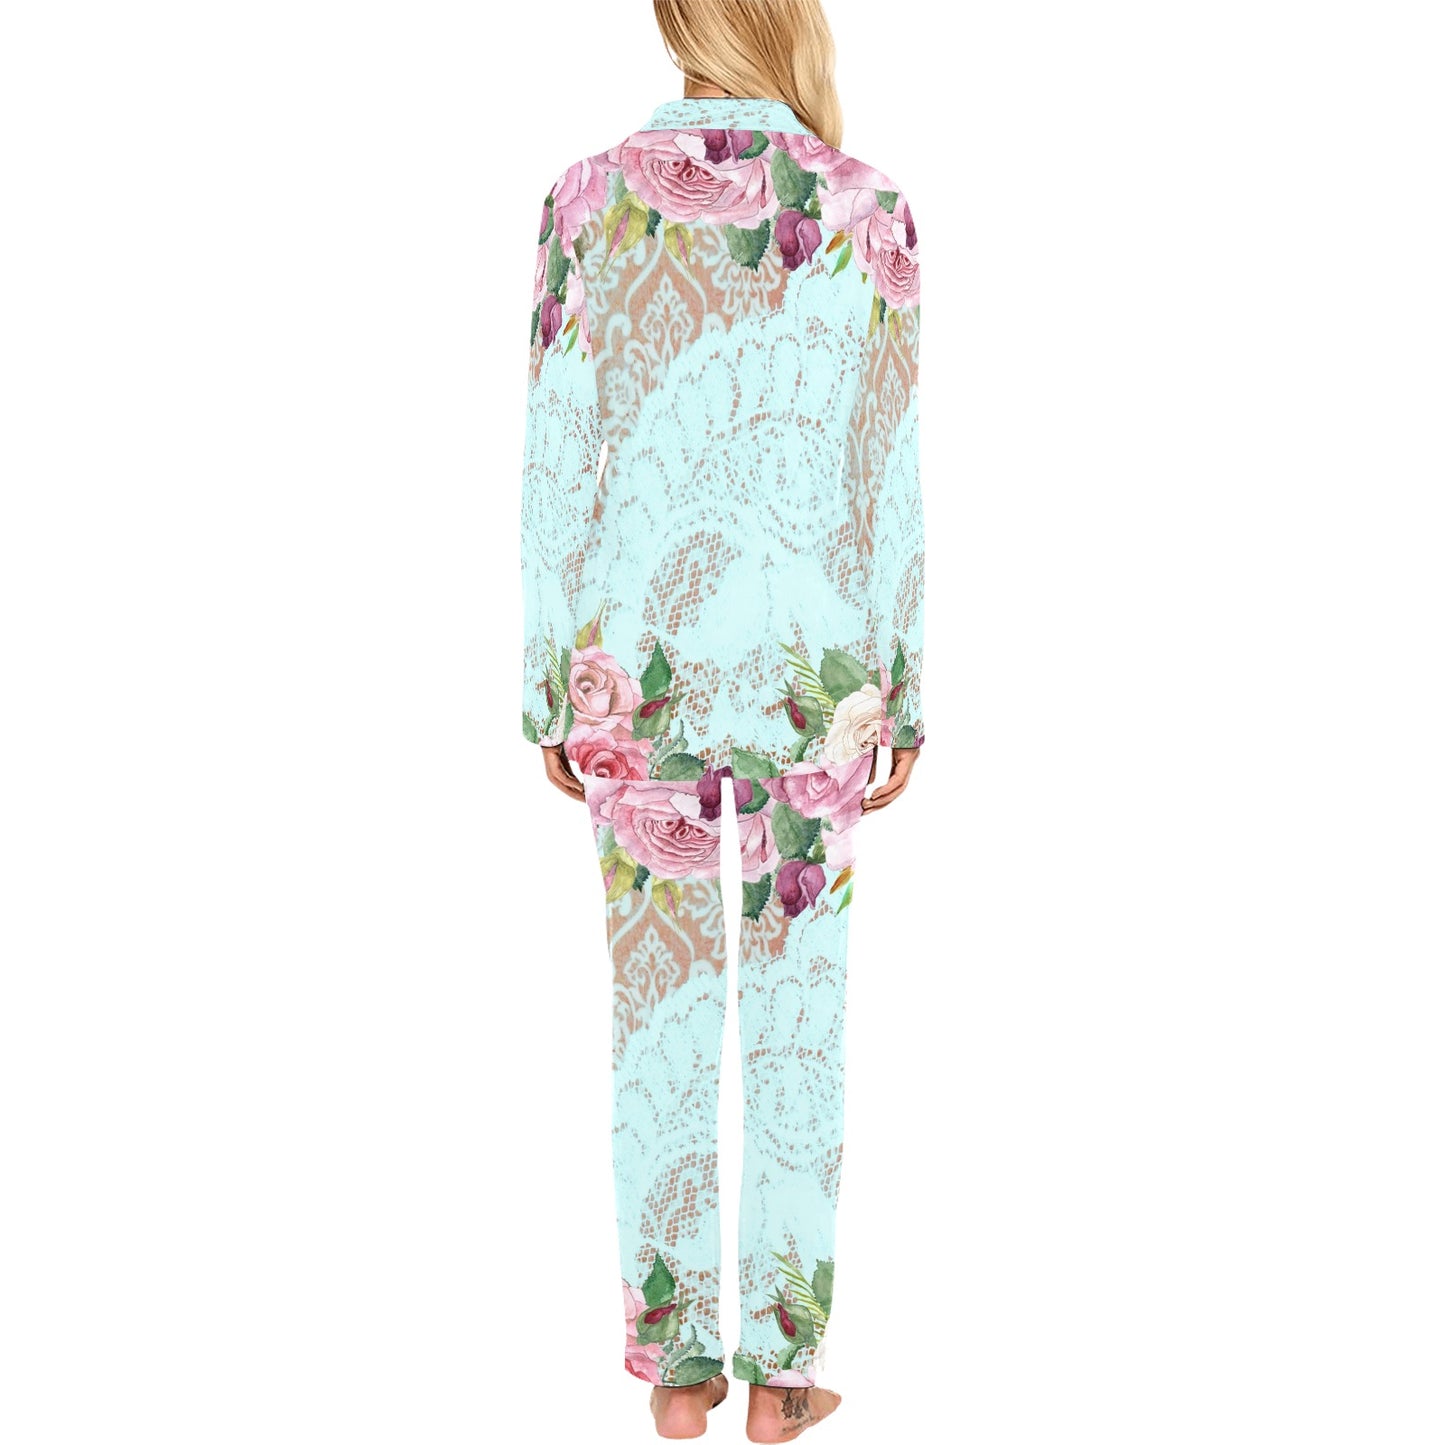 Victorian printed lace pajama set, design 24 Women's Long Pajama Set (Sets 02)